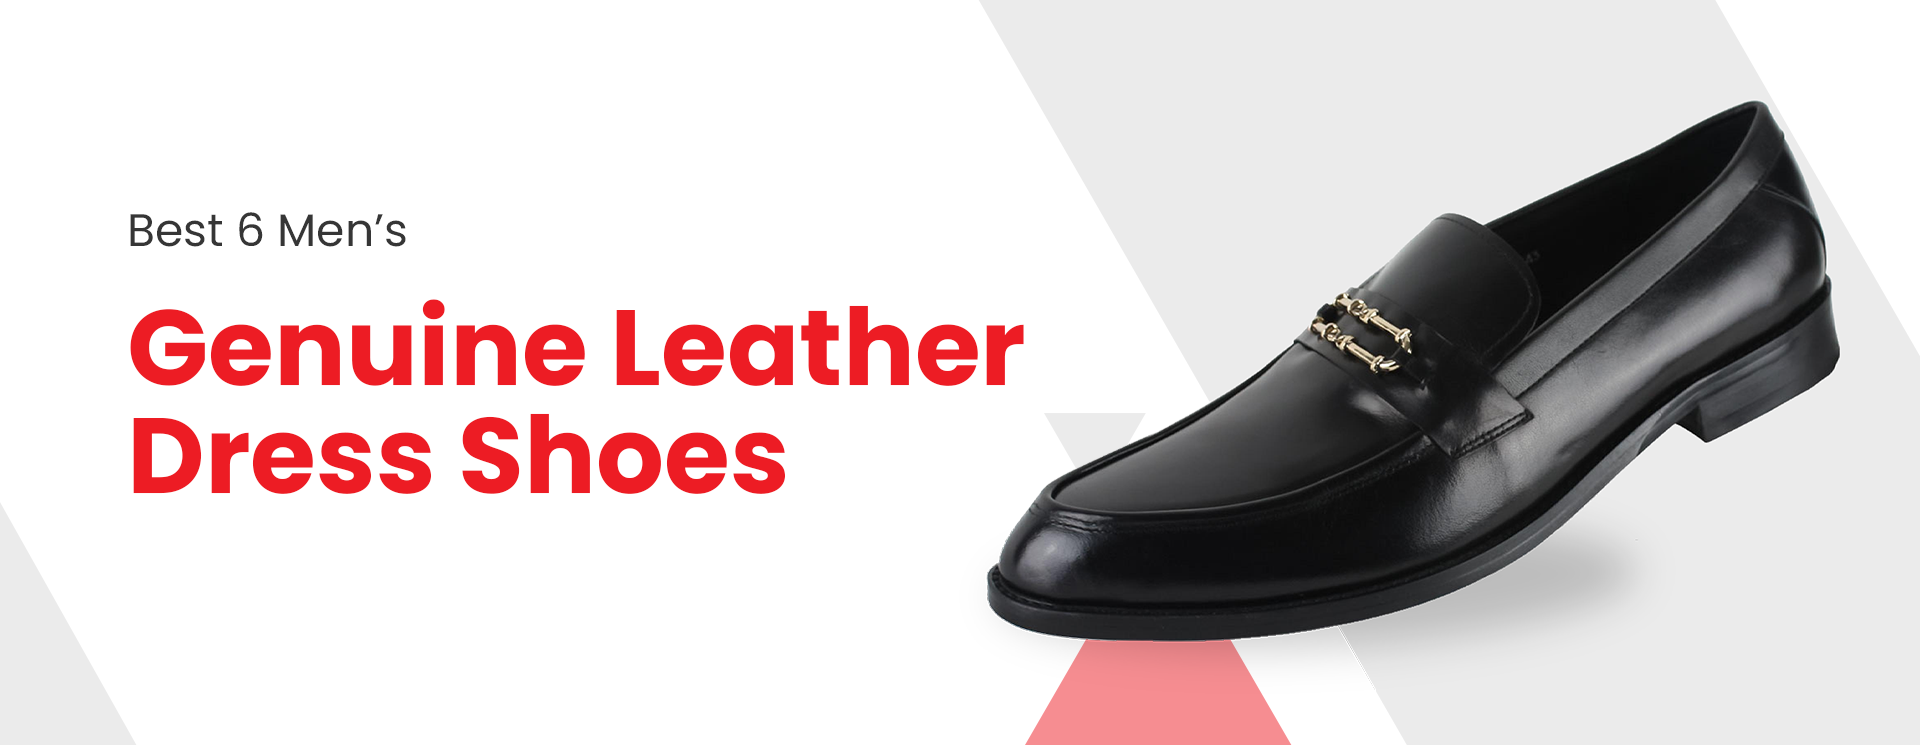 Best 6 Men’s Genuine Leather Dress Shoes